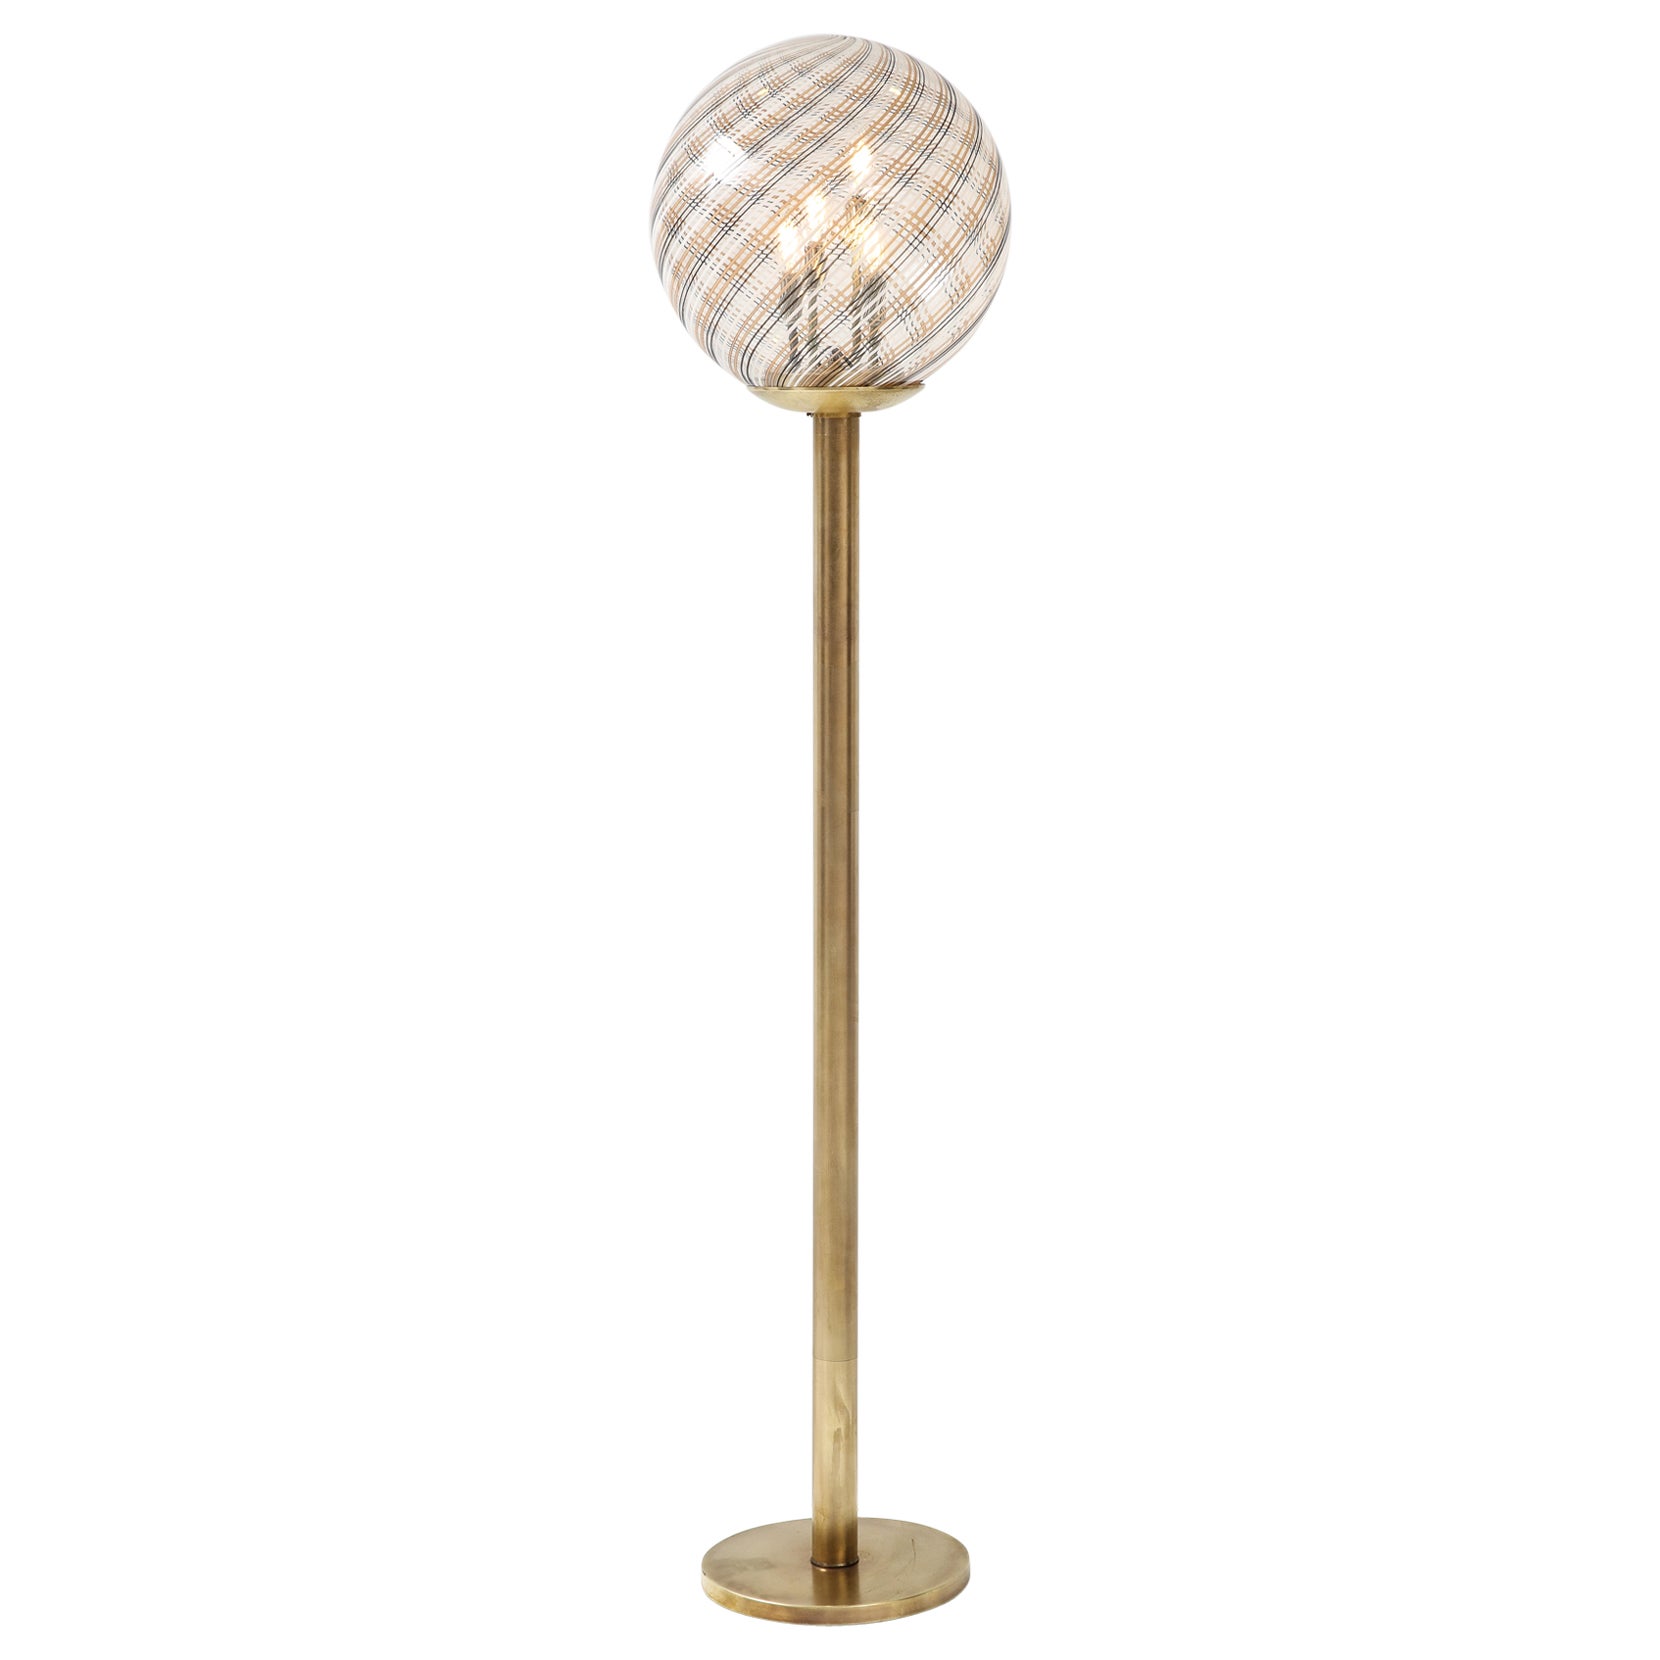 Italian Modernist Brass Floor Lamp with Glass Globe, circa 1970